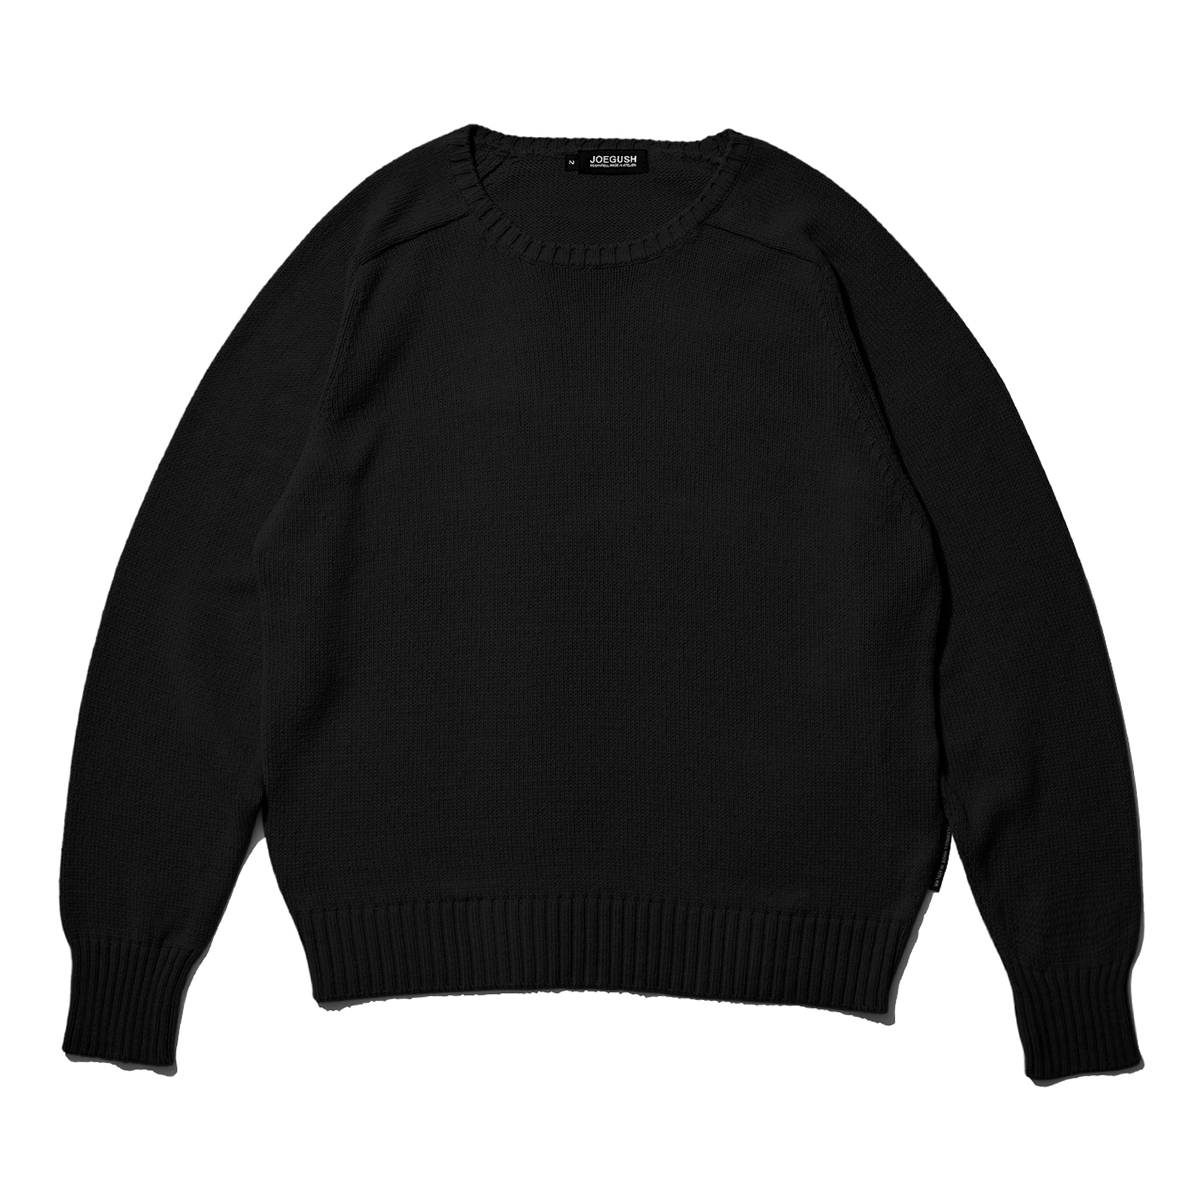 Single pullover knit Lv.1 (Black)